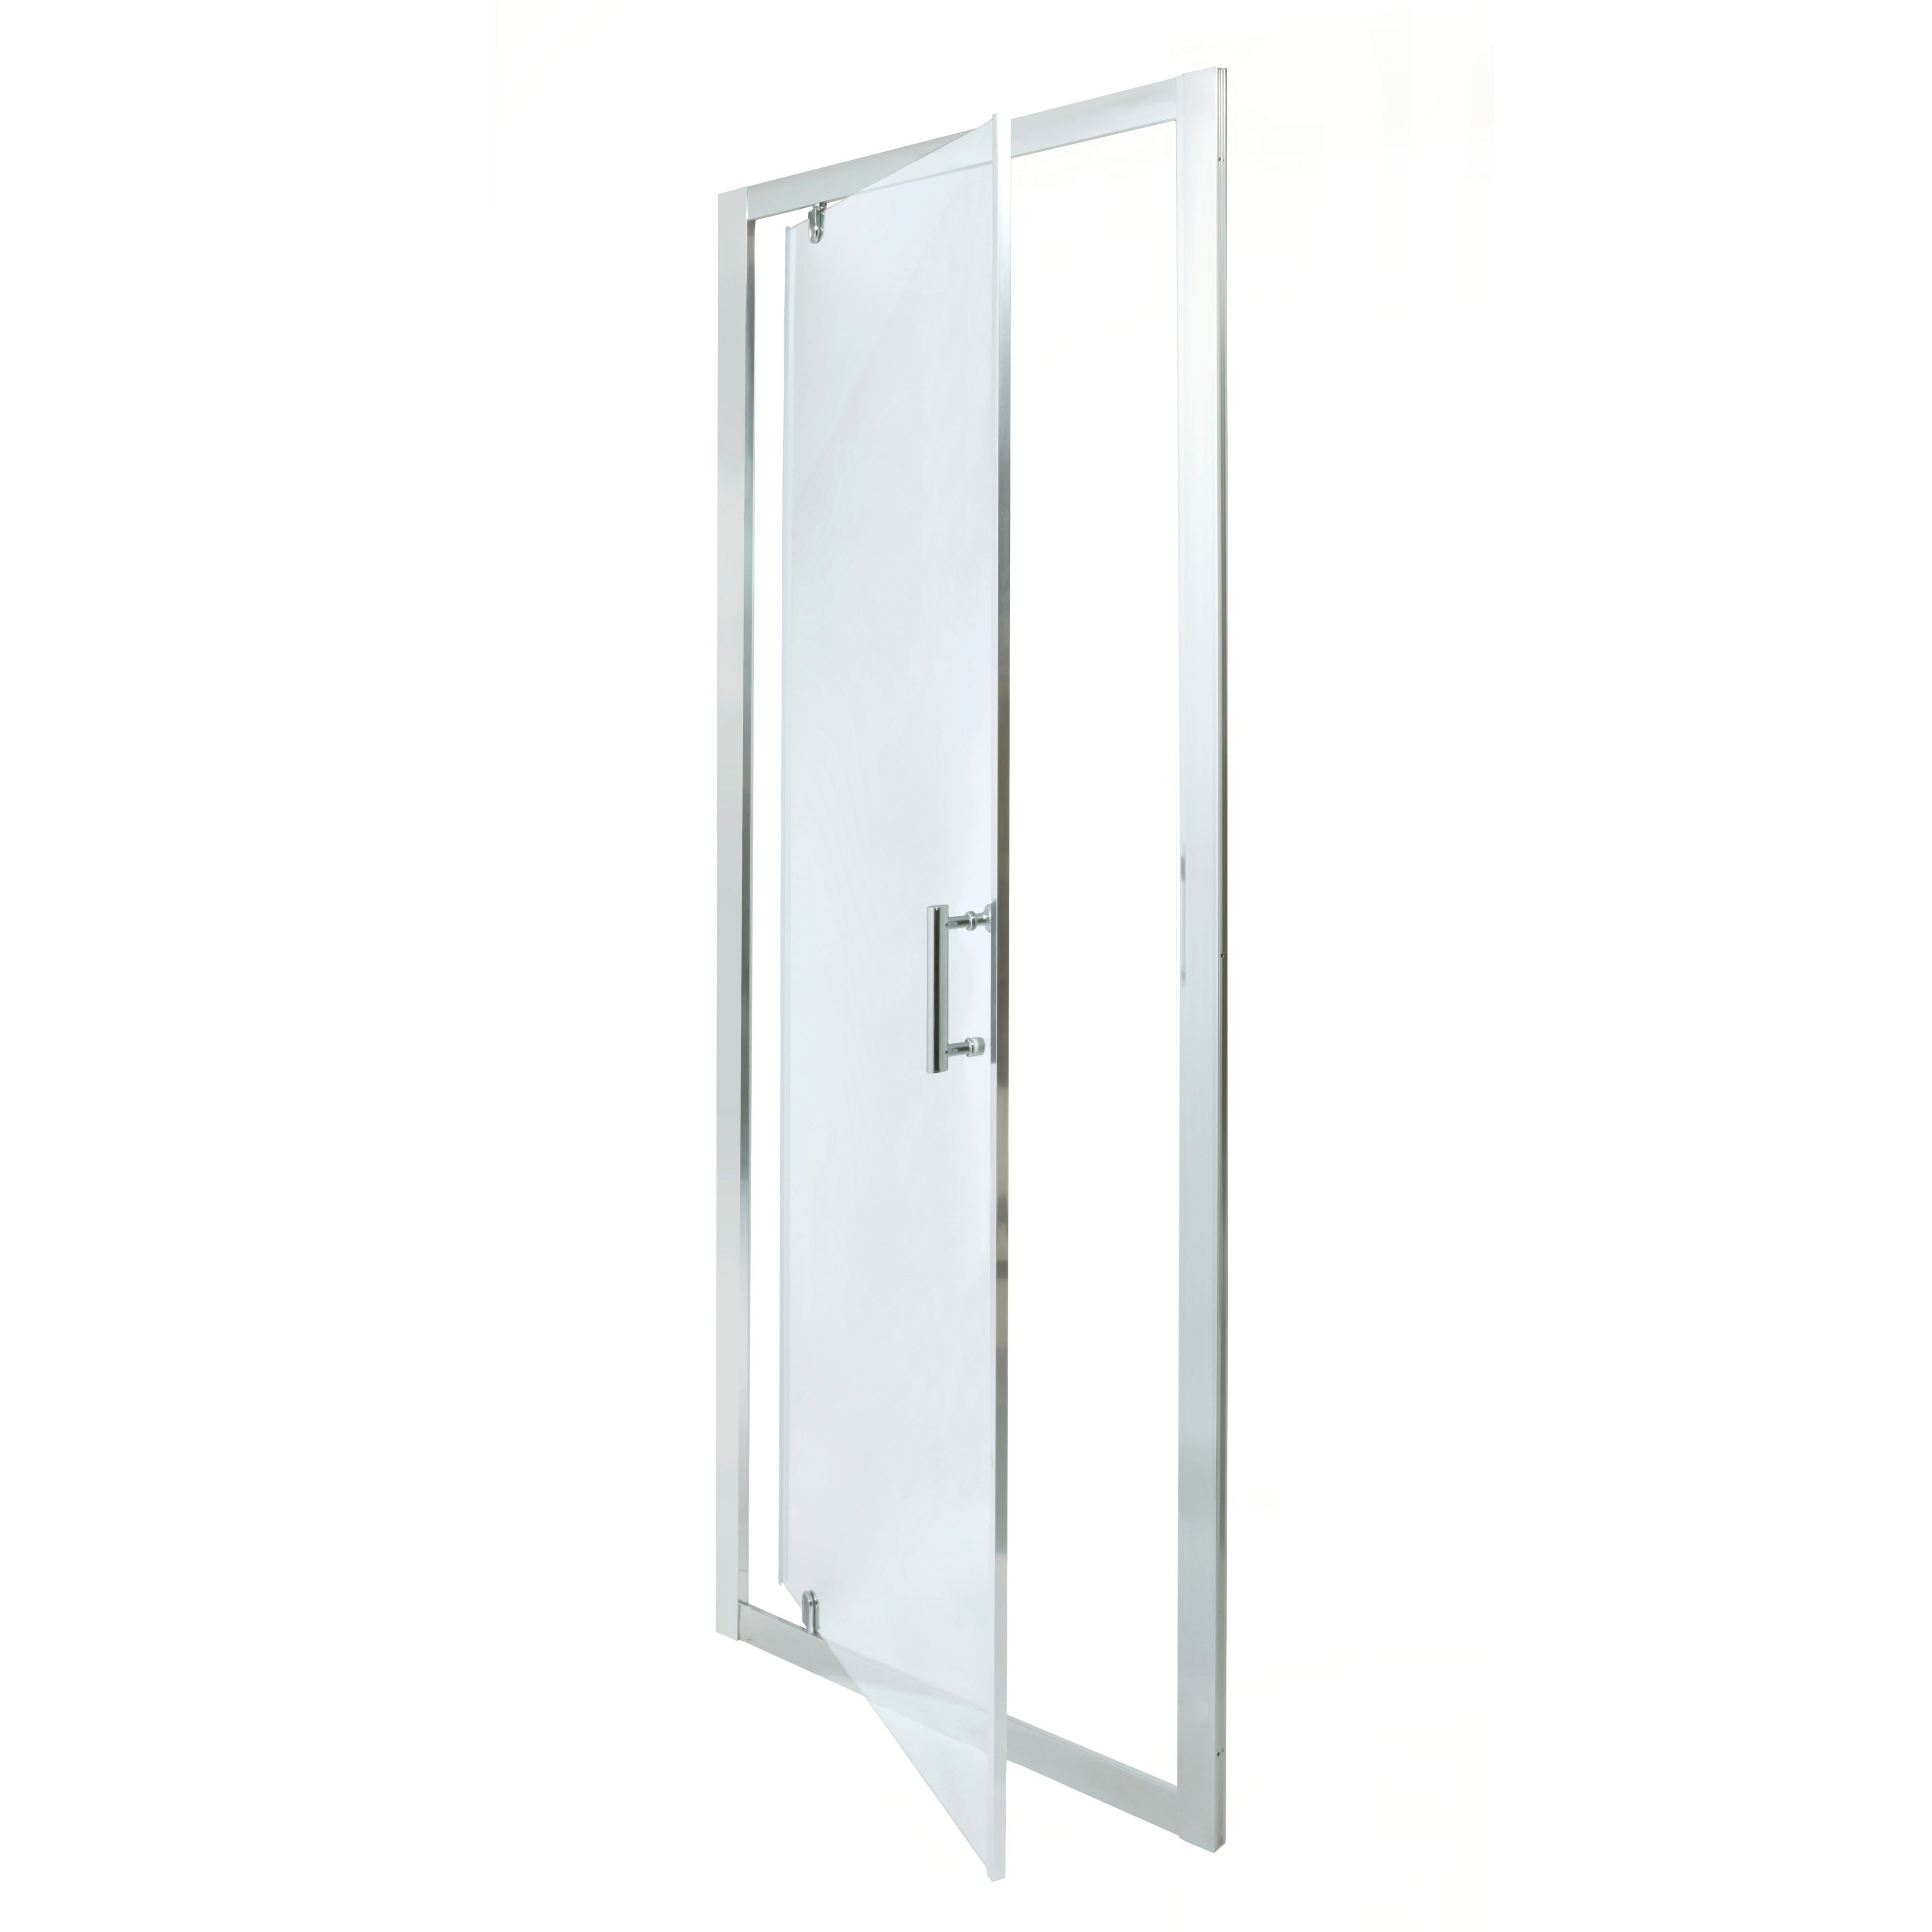 Cooke & Lewis Onega Silver effect Clear Pivot Shower Door (H)190cm (W)76cm